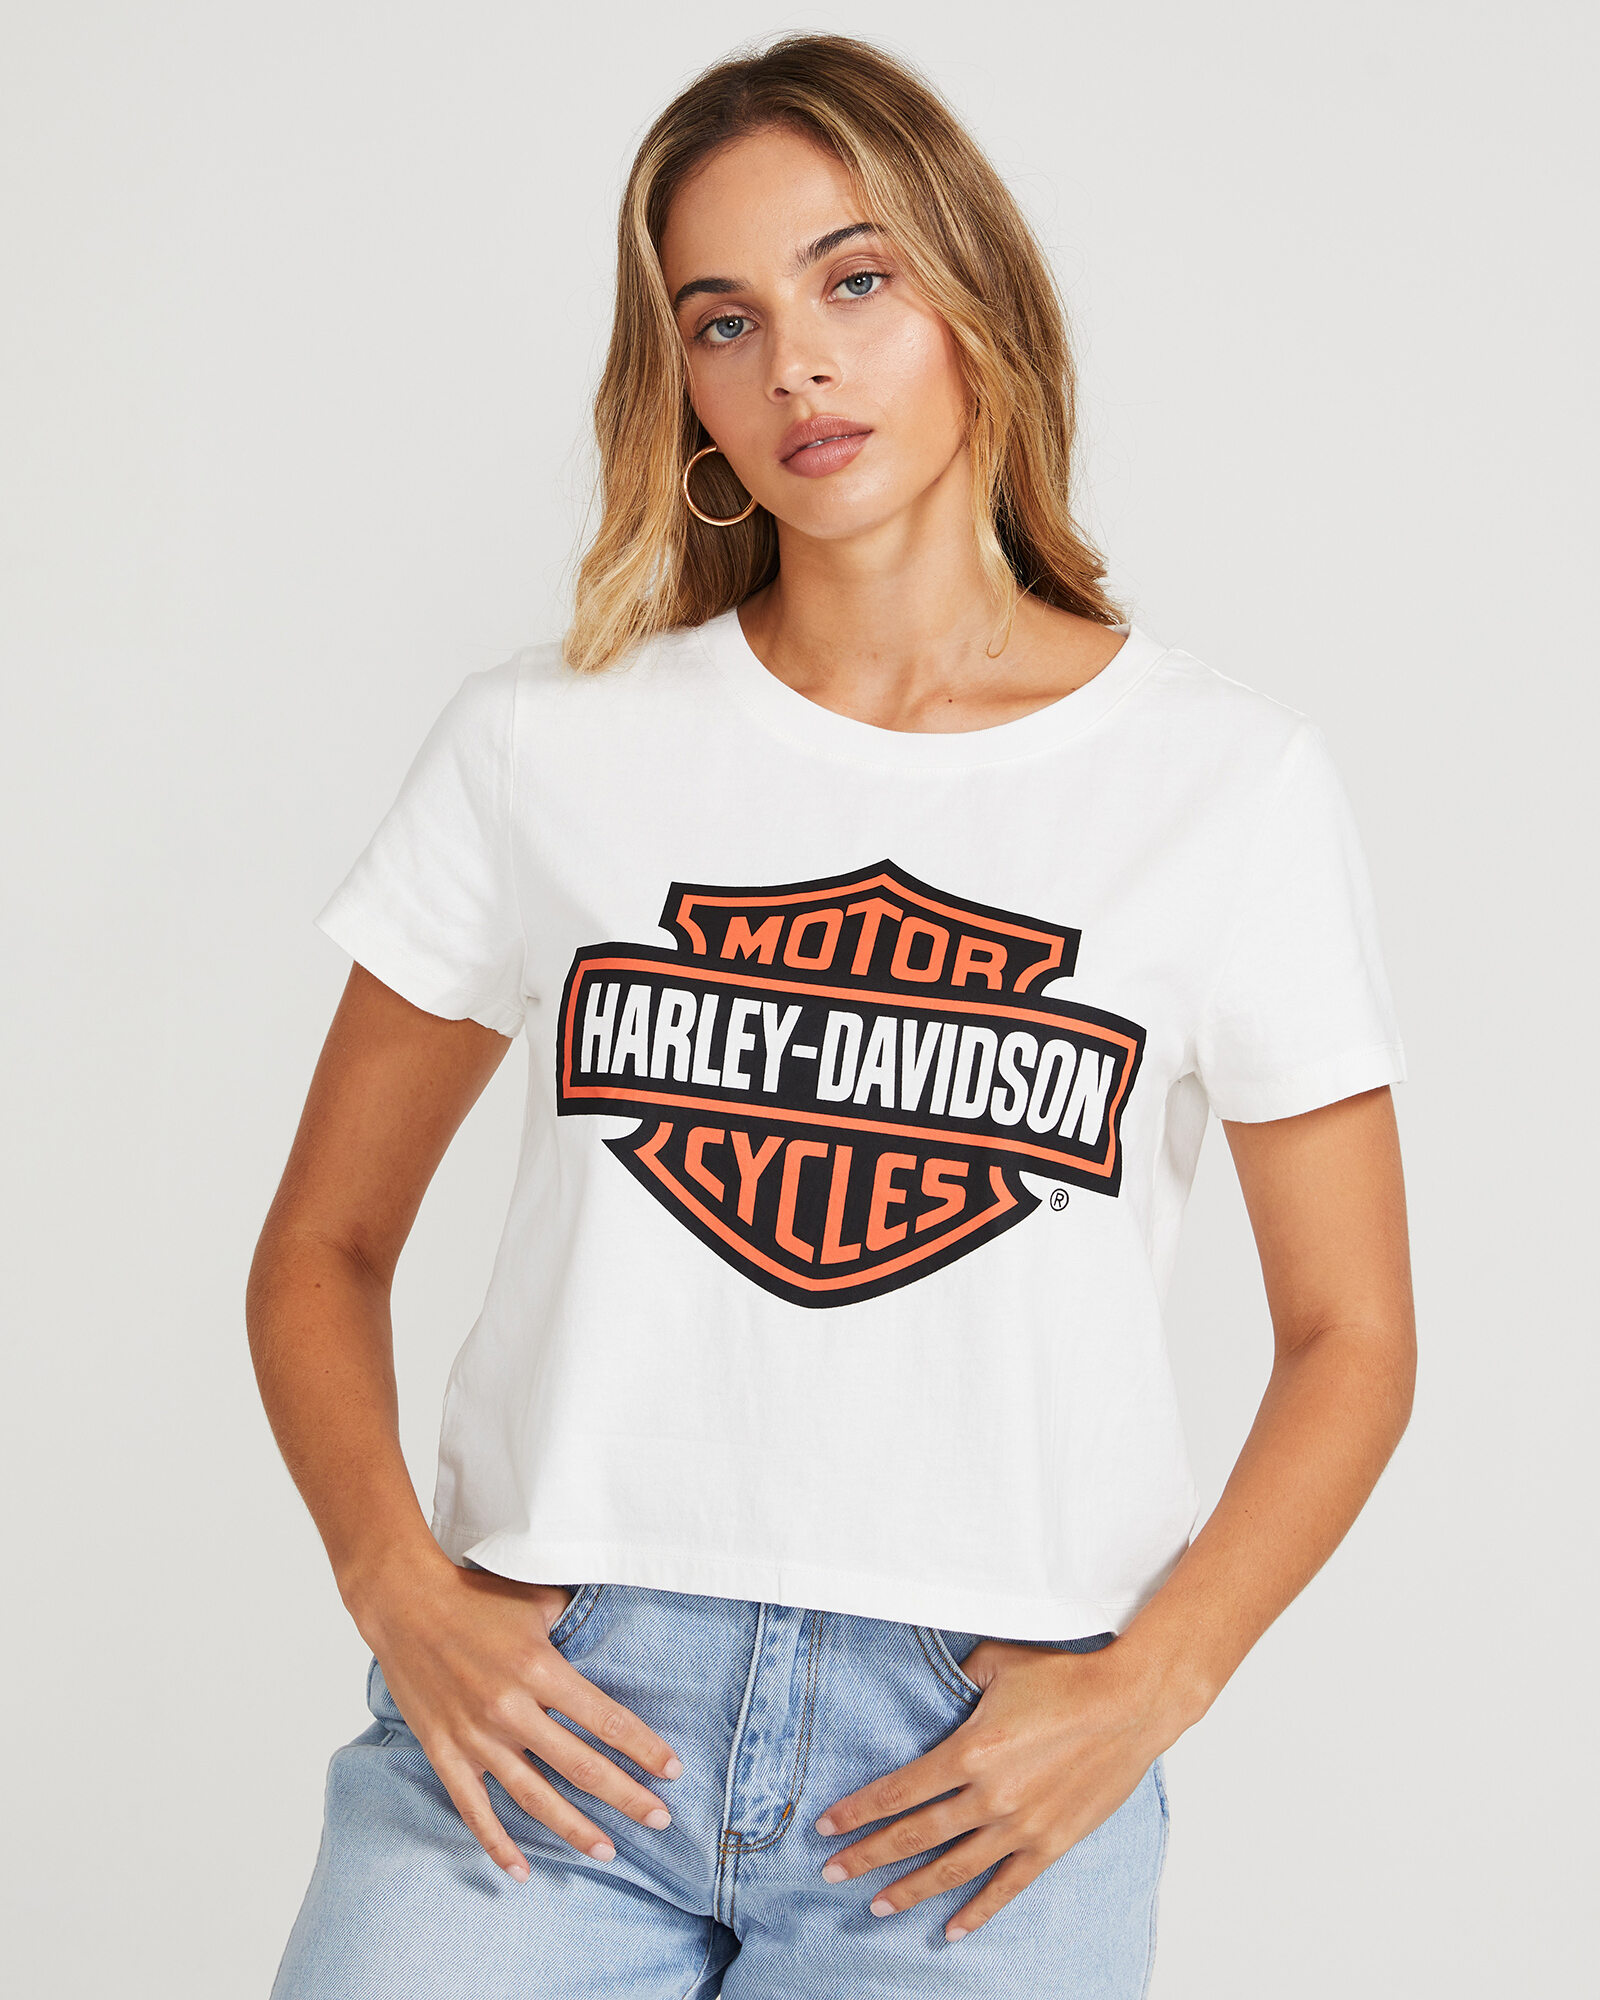 Buy Harley Davidson T Shirt Nz Cheap Online